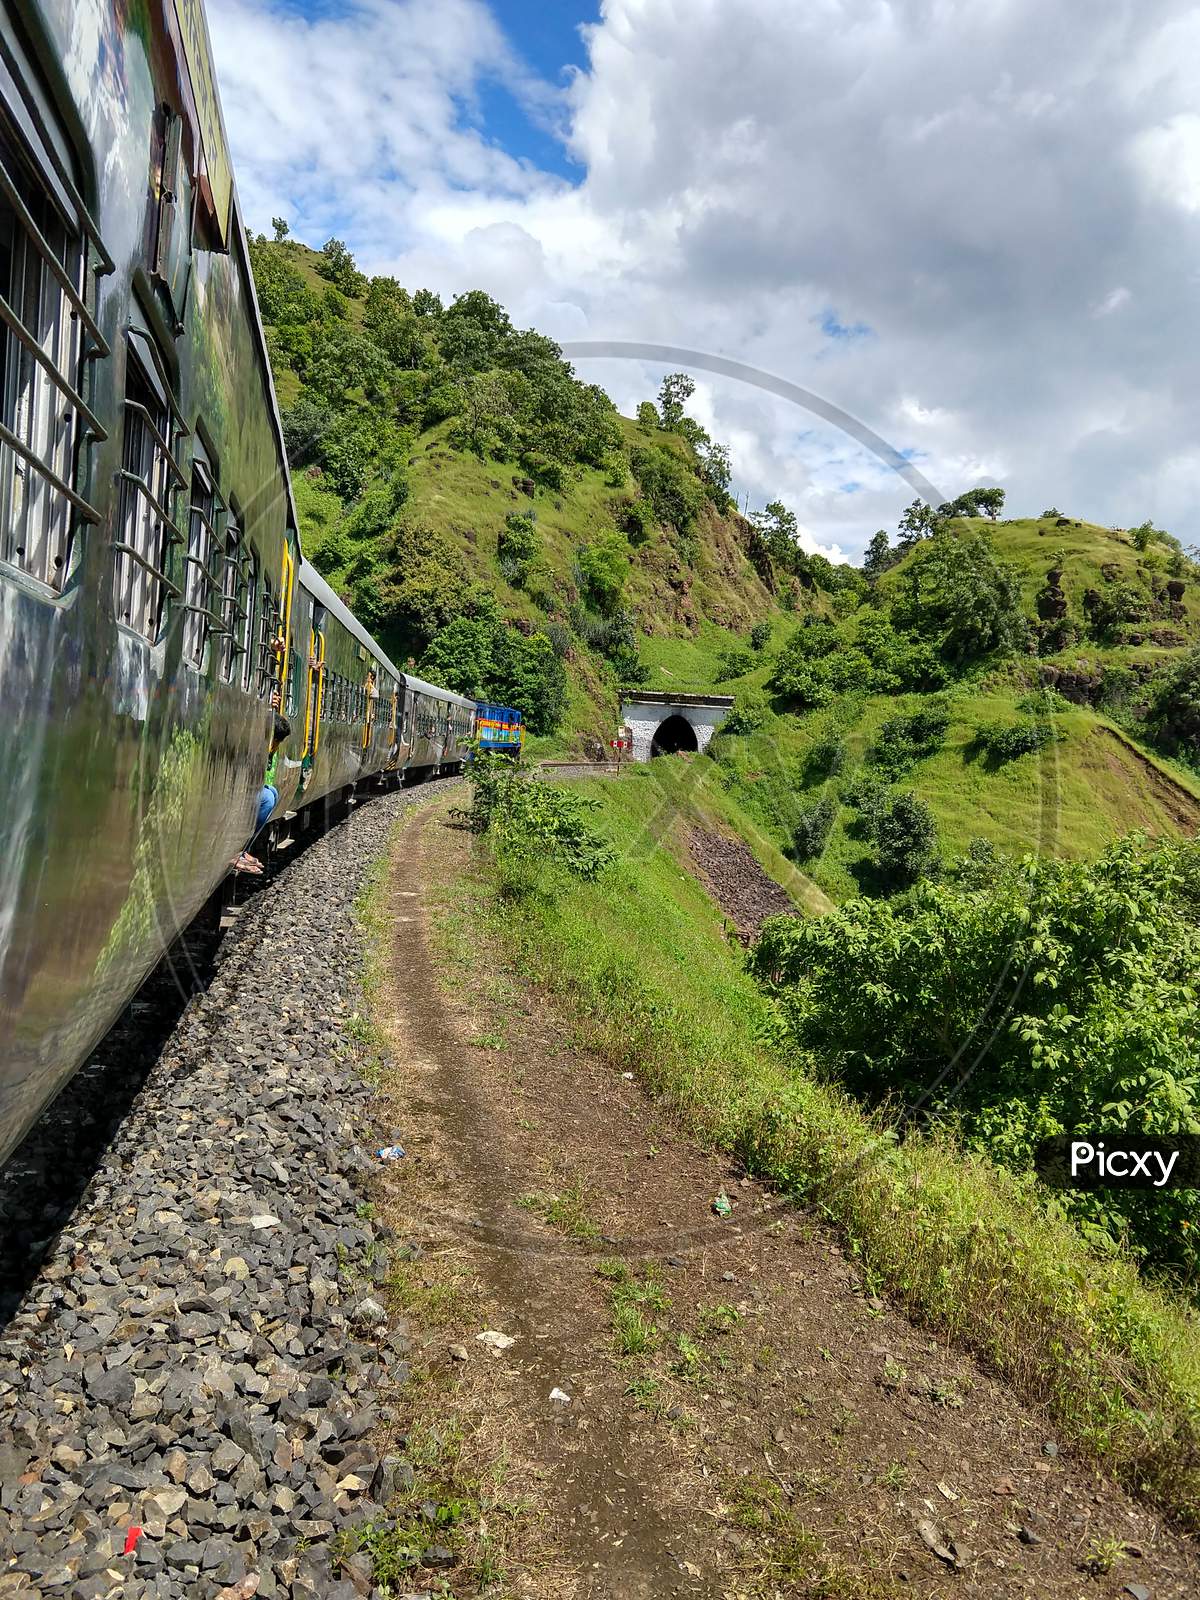 A Train Enter In A Tunnel In Mountain, Indian Railway- Madhya Pradesh, India